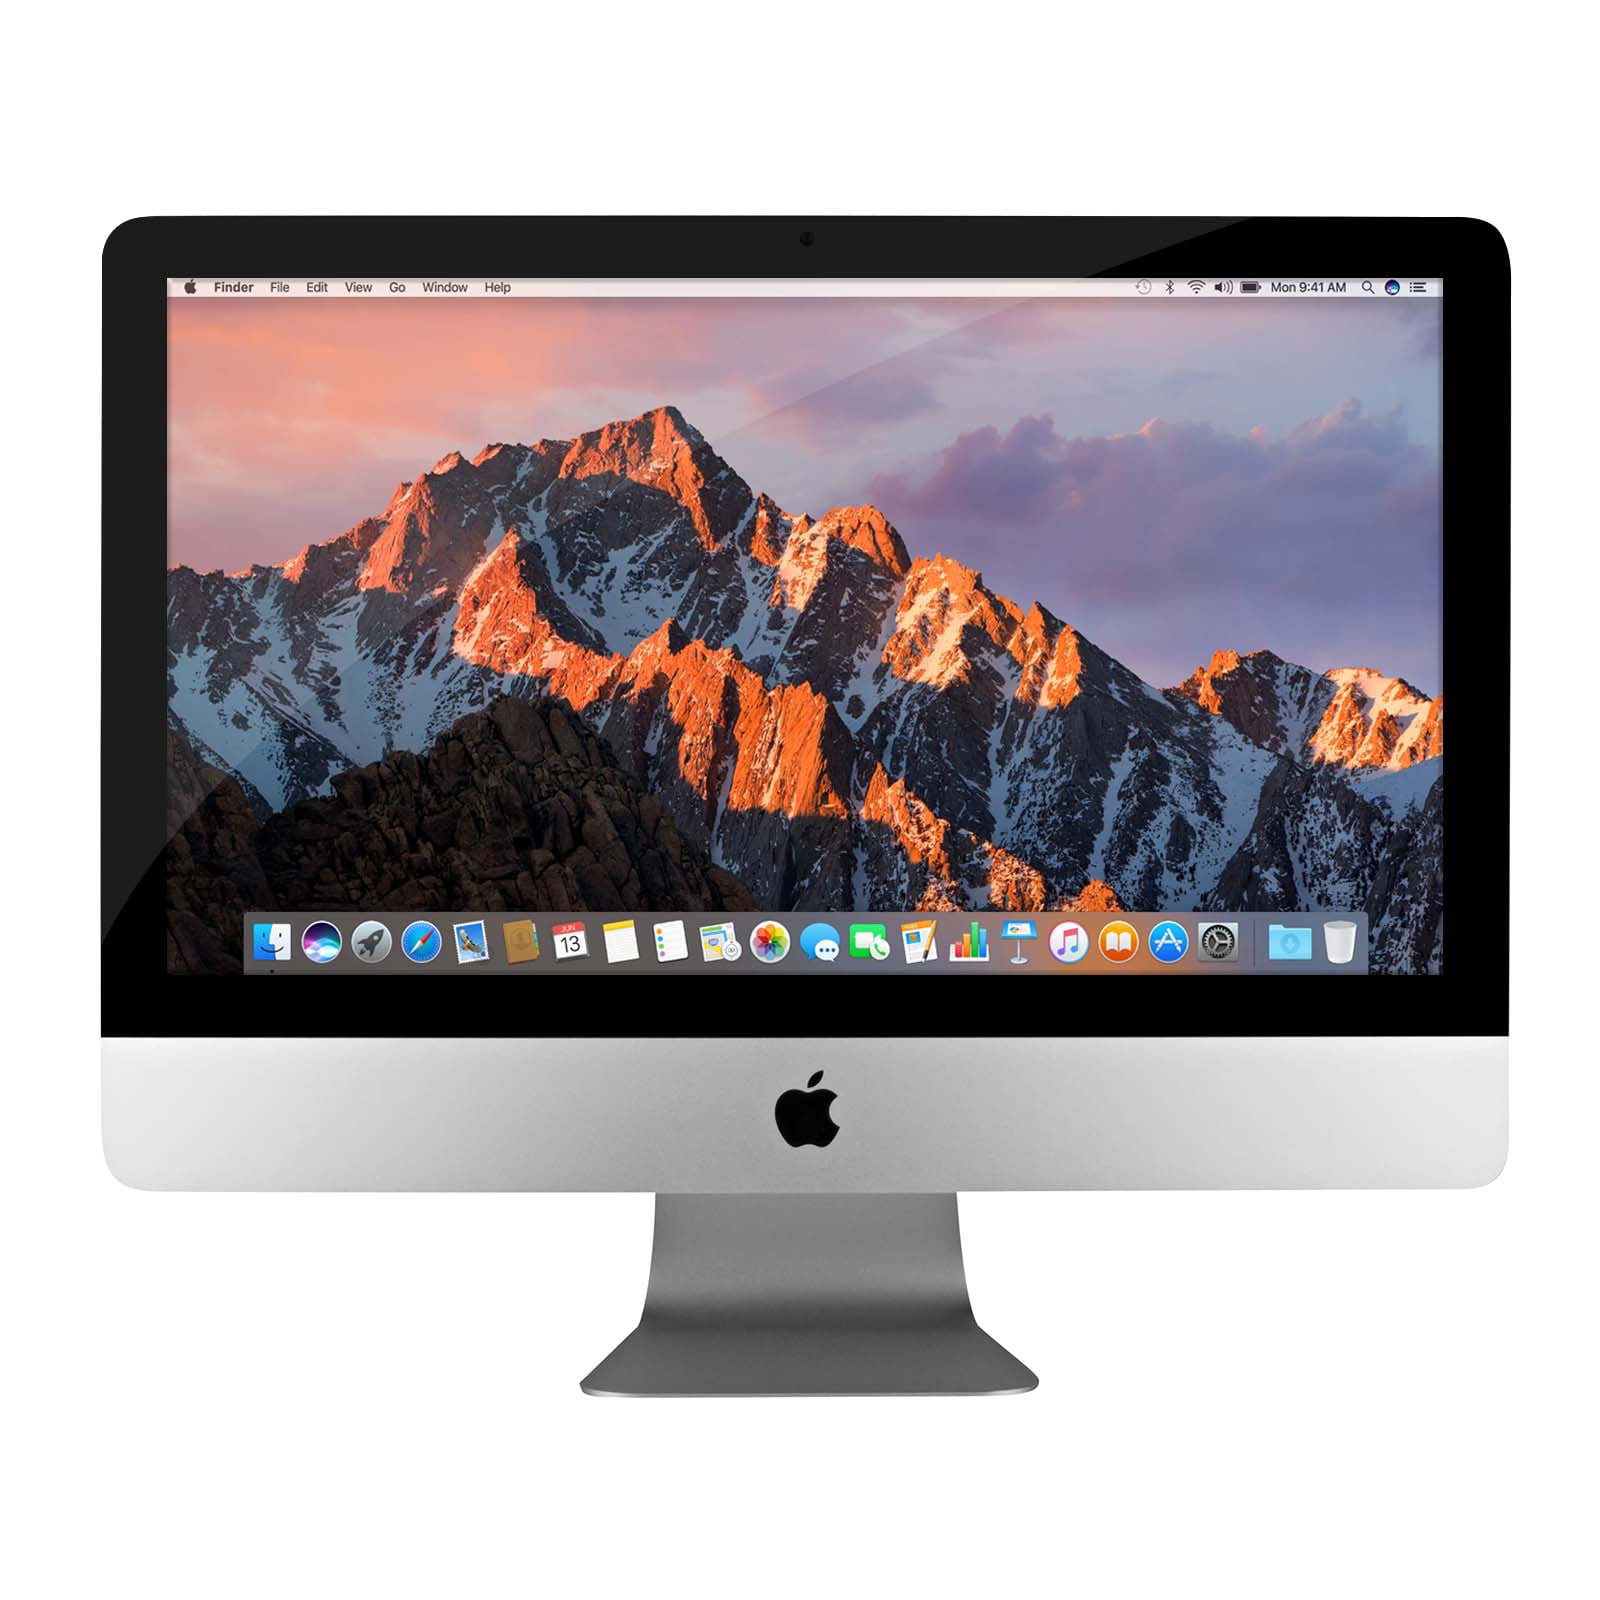 Apple iMac 21.5-inch ME087LL/A Late 2013 Silver - Intel Core i5-4570S 2.9Ghz - 8GB RAM - 1TB HDD